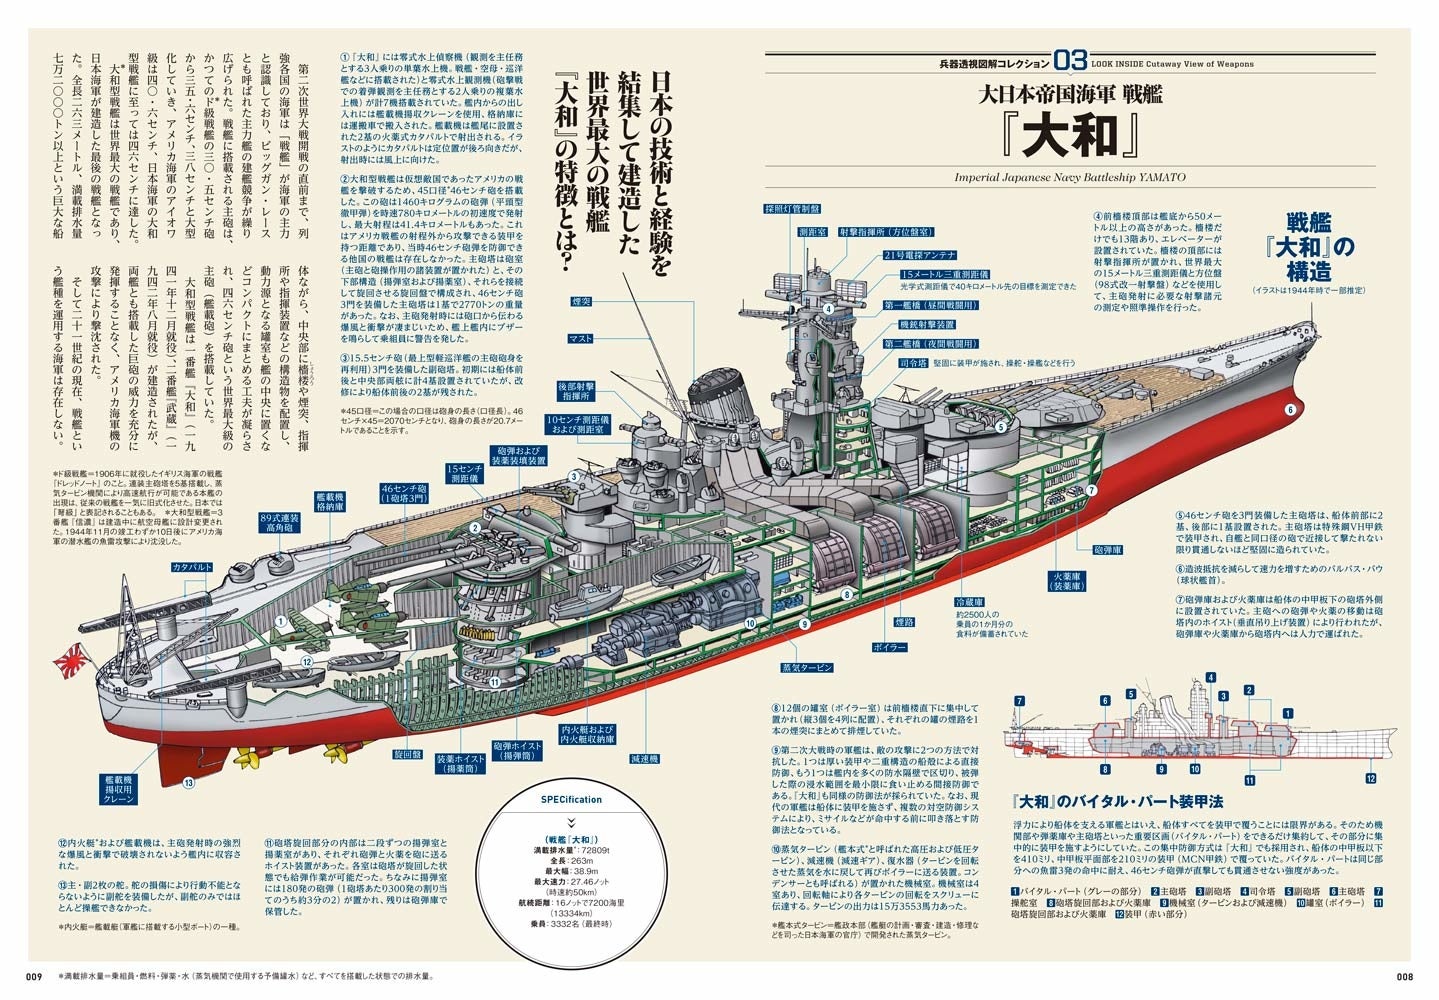 0-ijn-battleship-yamato-cutaway-view-cutaway-frigates-destroyer-japan-japanese-tameichi-hara-0.jpg